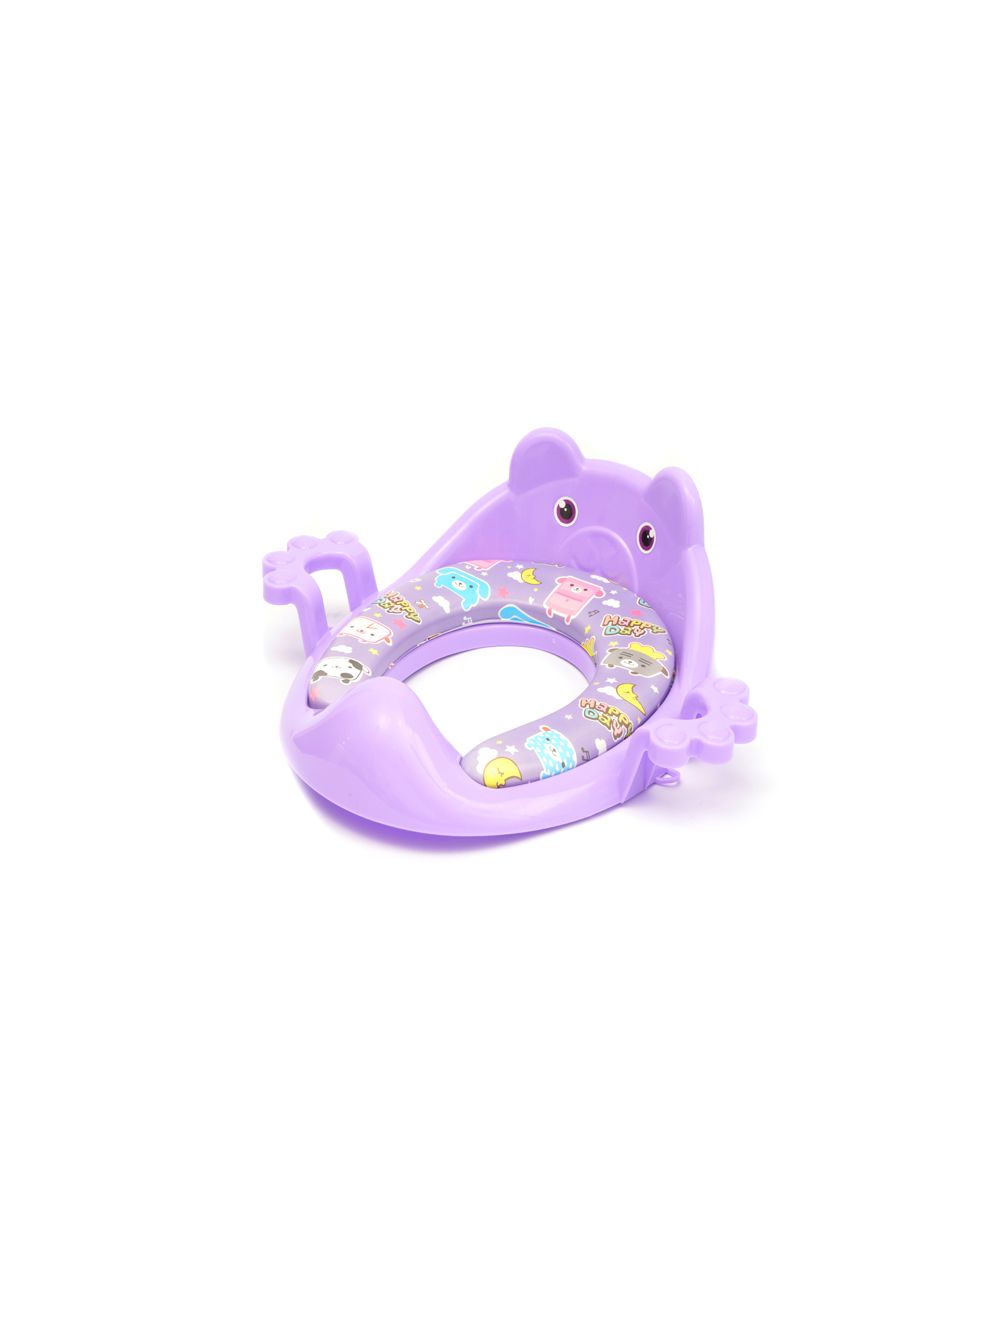 Joymaker Baby Toilet Seat Purple